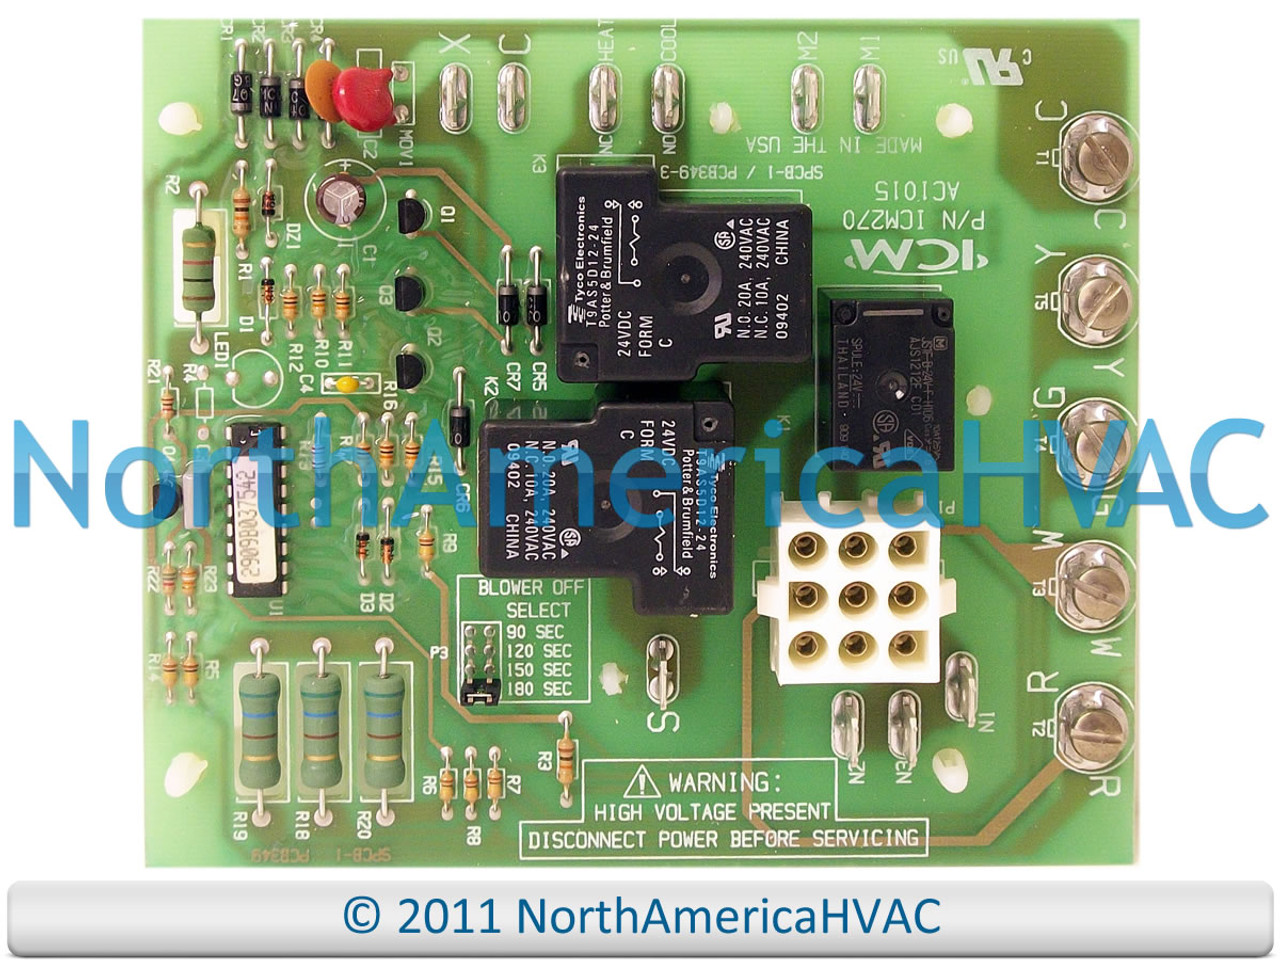 ICM270C ICM270 EVCON Fan Blower Circuit Control Board # 2702-300 